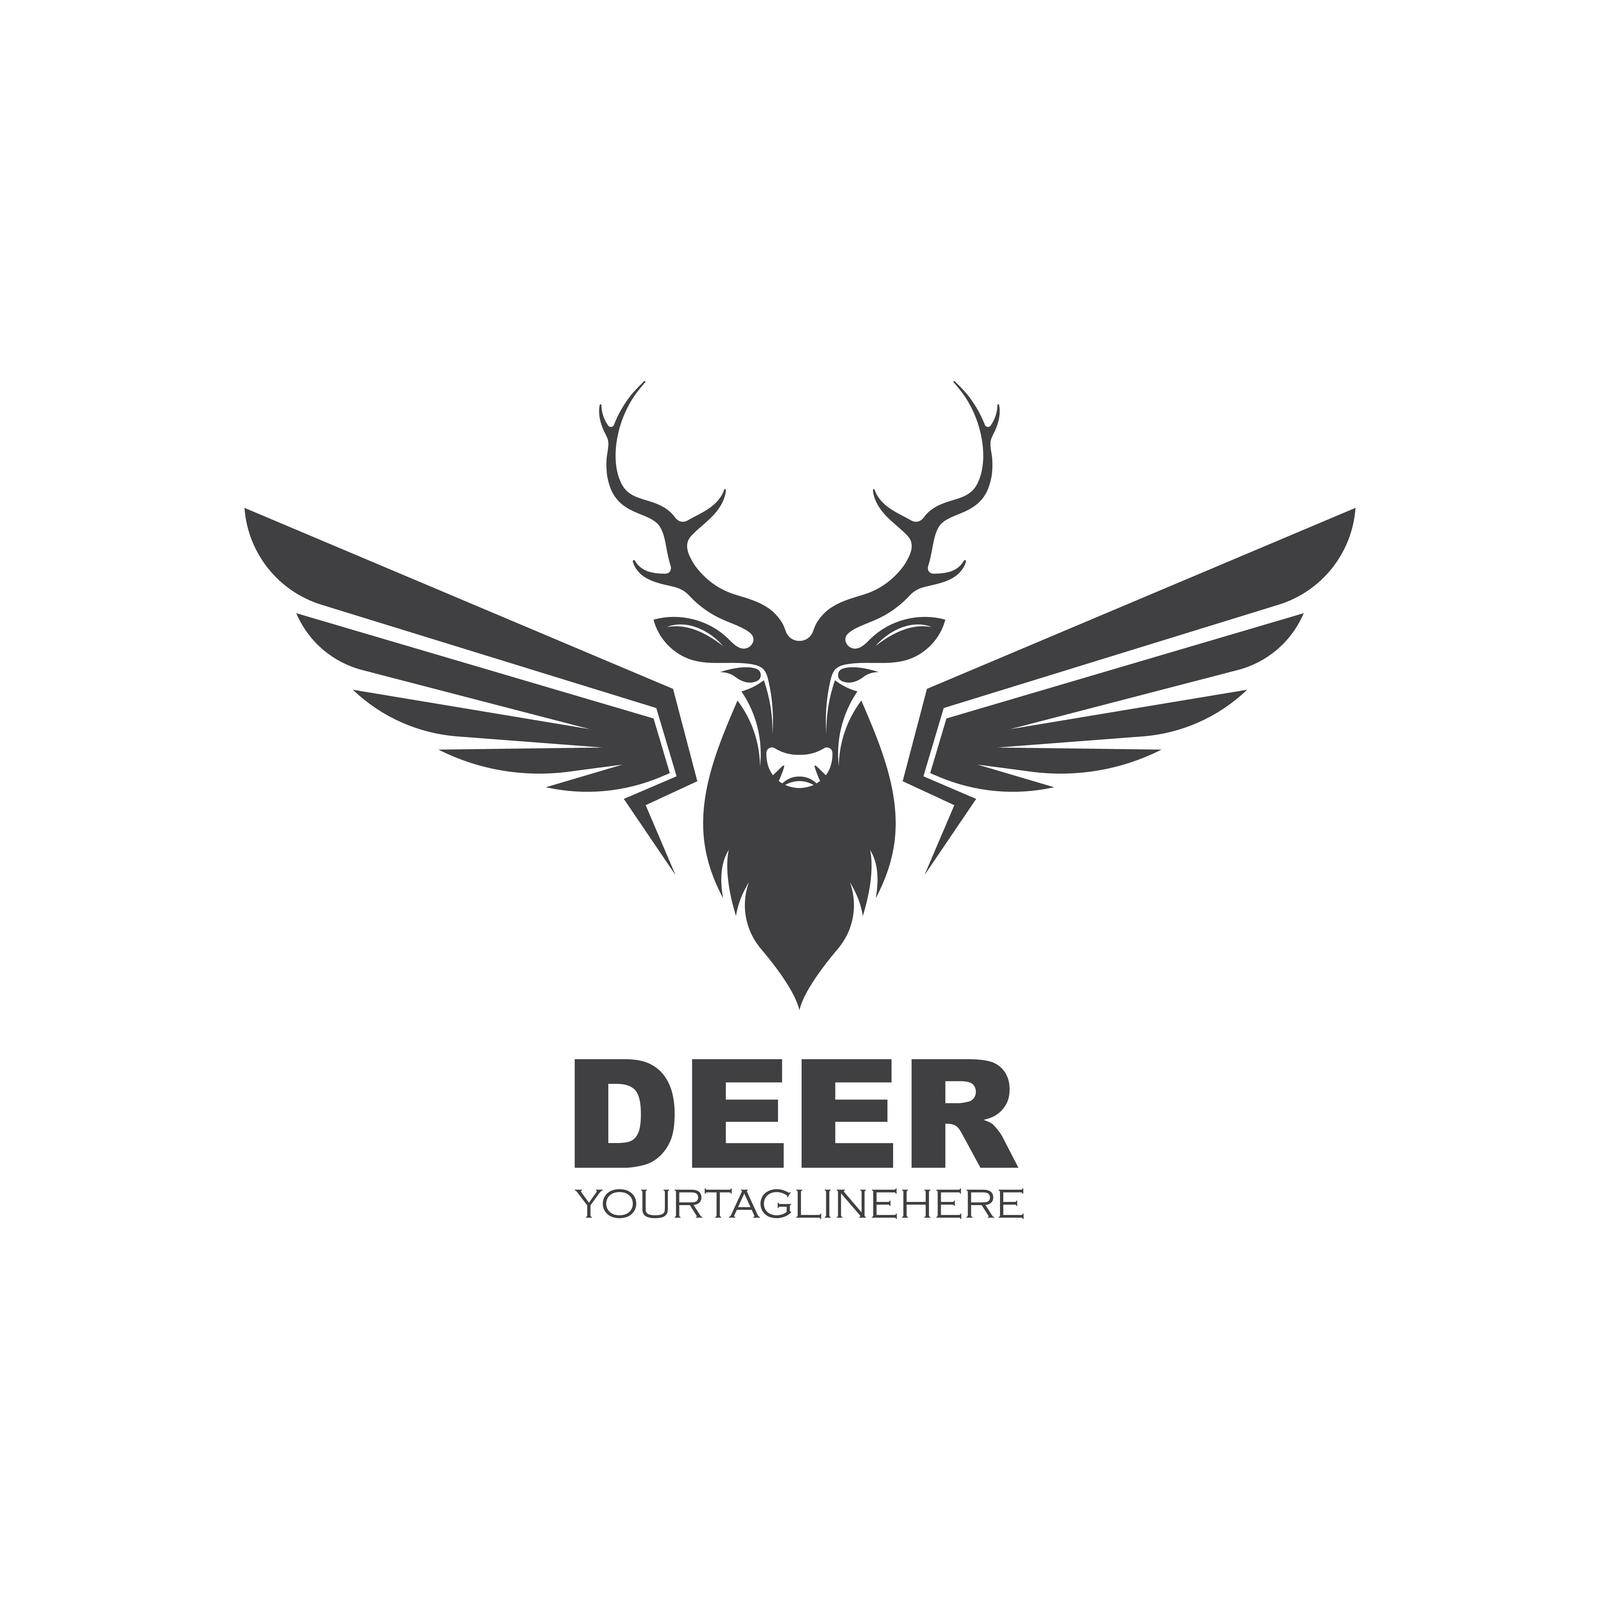 Deer ilustration icon vector design by idan